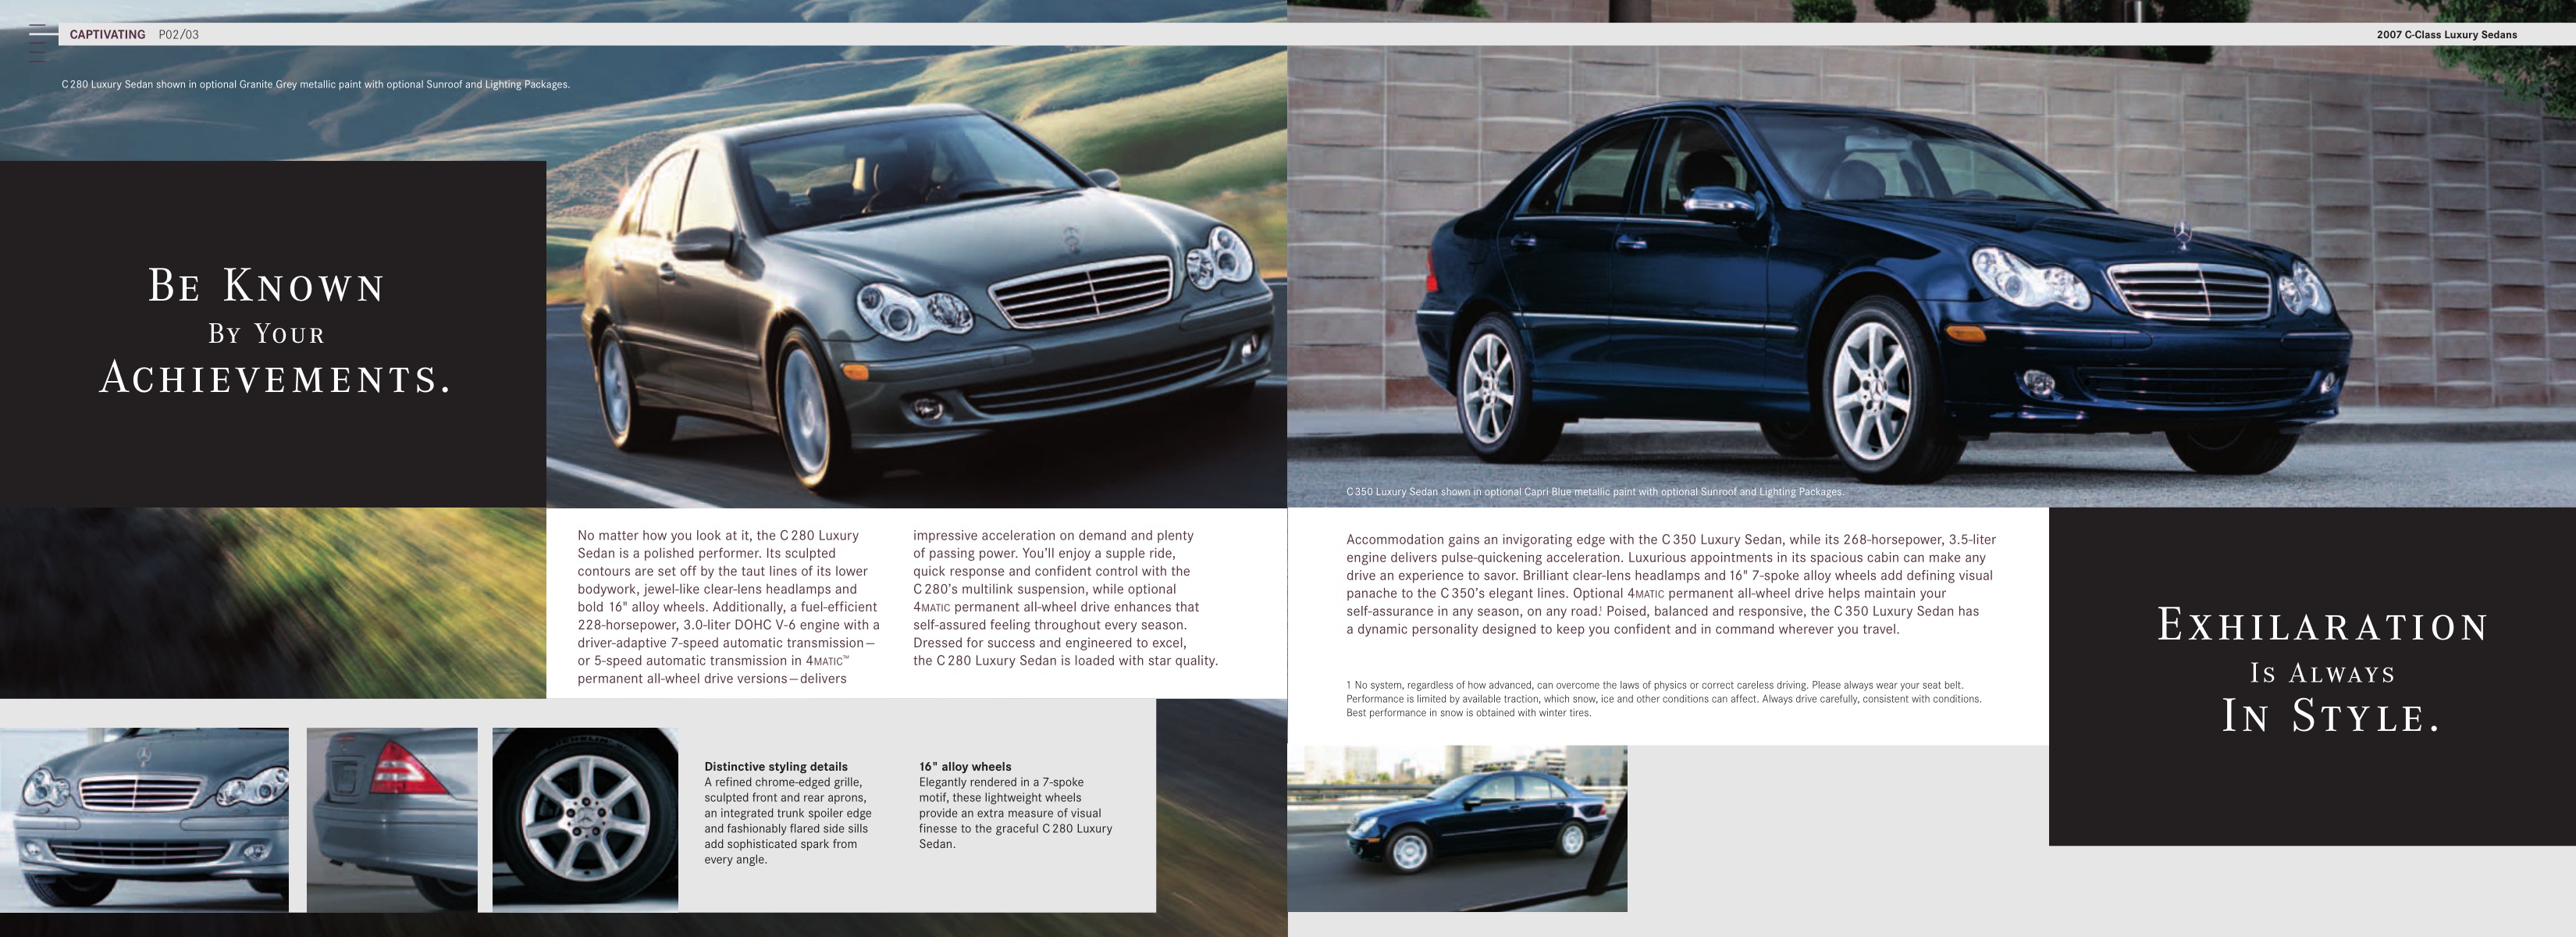 2007 Mercedes-Benz C-Class Luxury Brochure Page 3